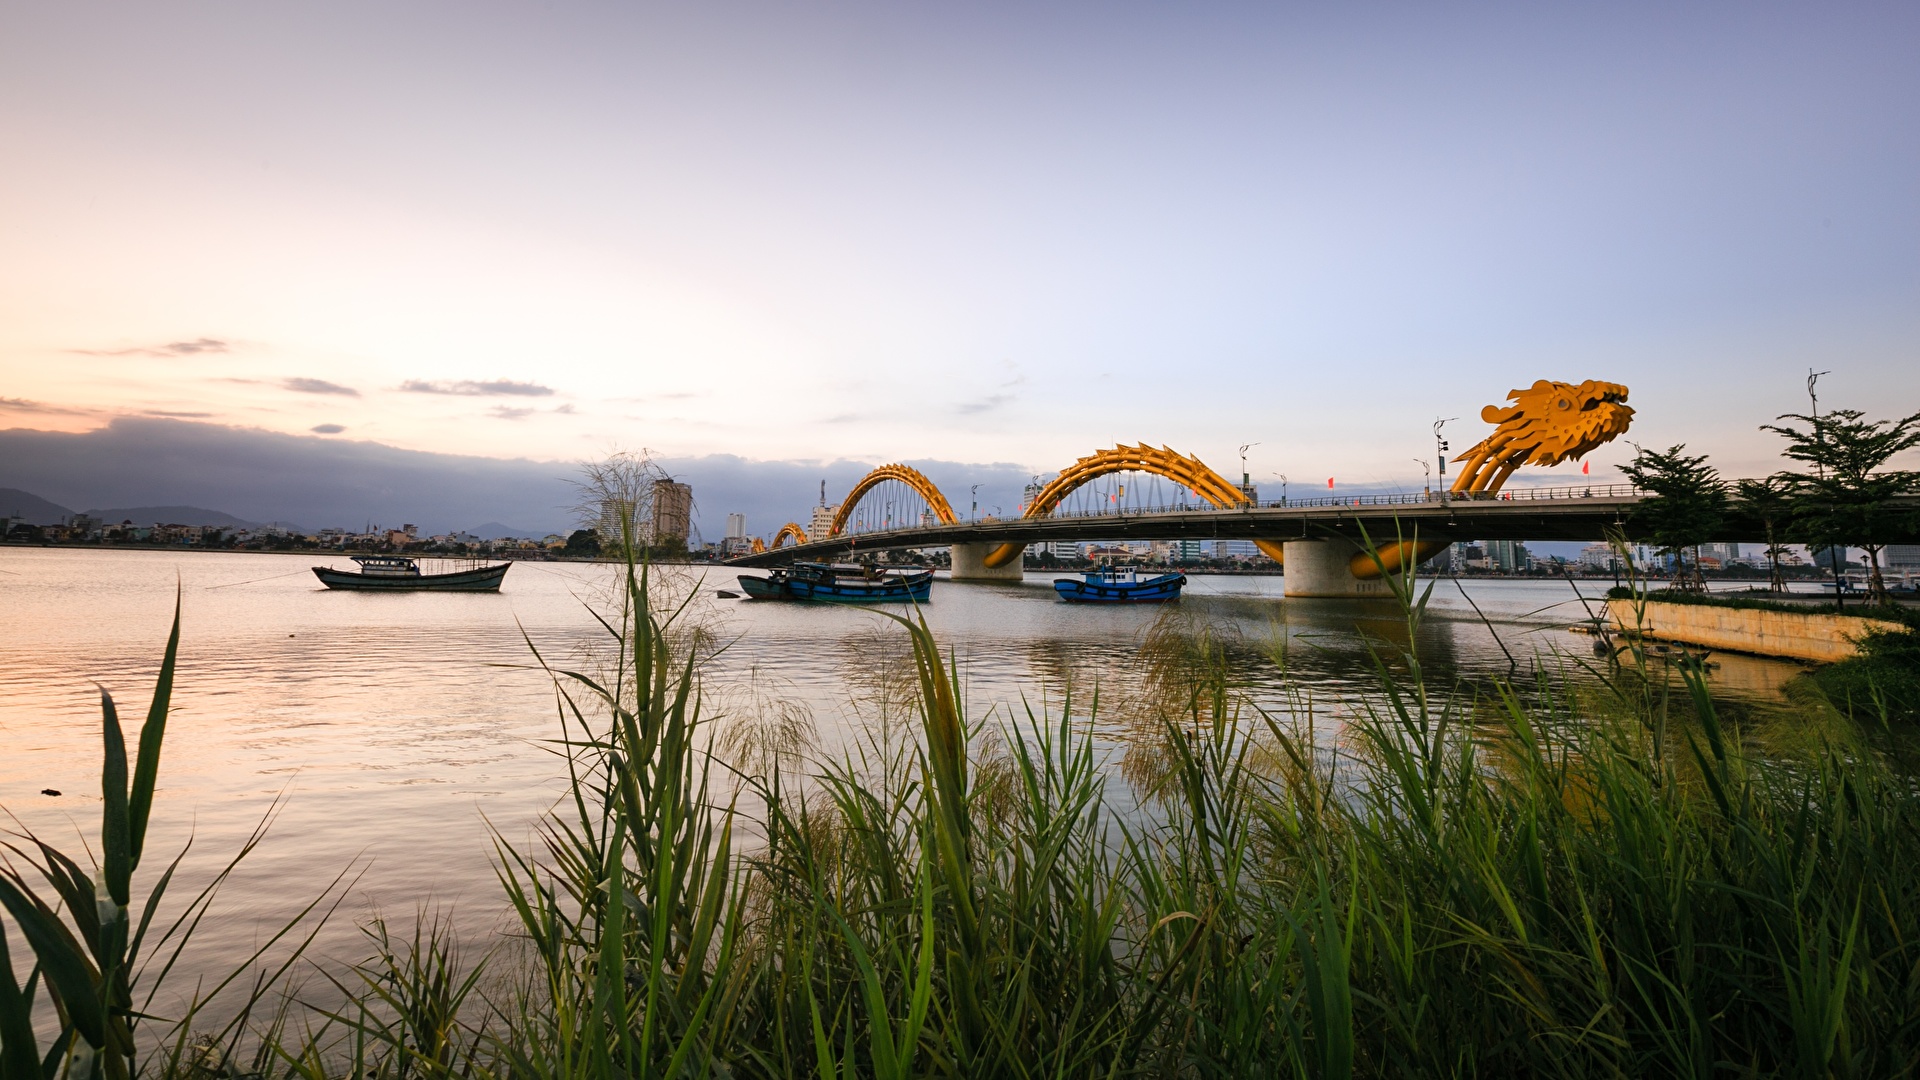 Картинка Драконы Вьетнам Dragon Bridge, Danang Мосты Речные суда Реки траве город 1920x1080 дракон мост река речка Трава Города